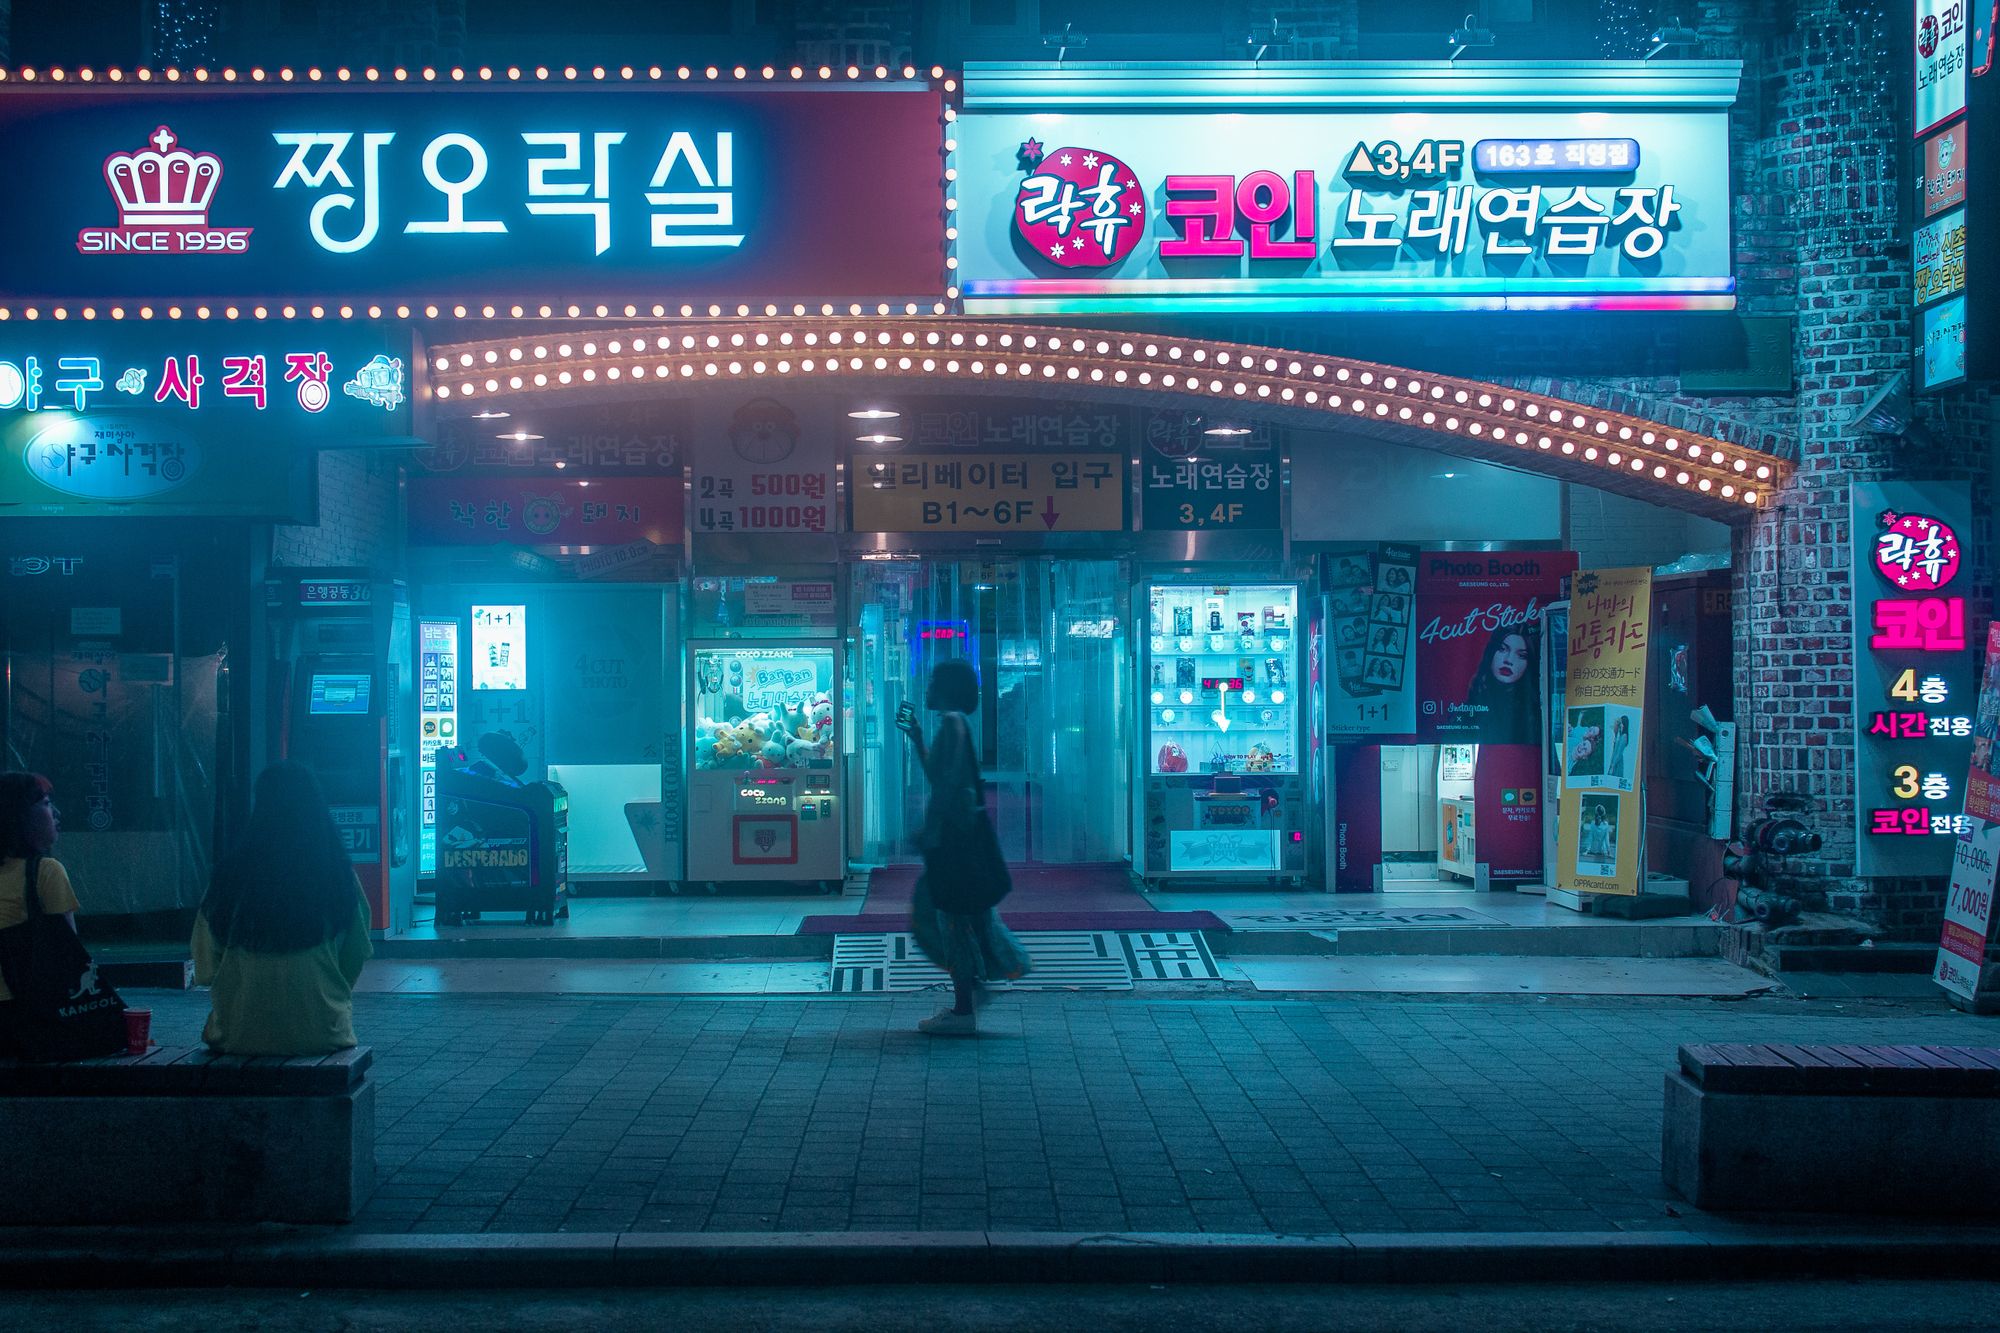 A woman walks through a nighttime urban street in Korea